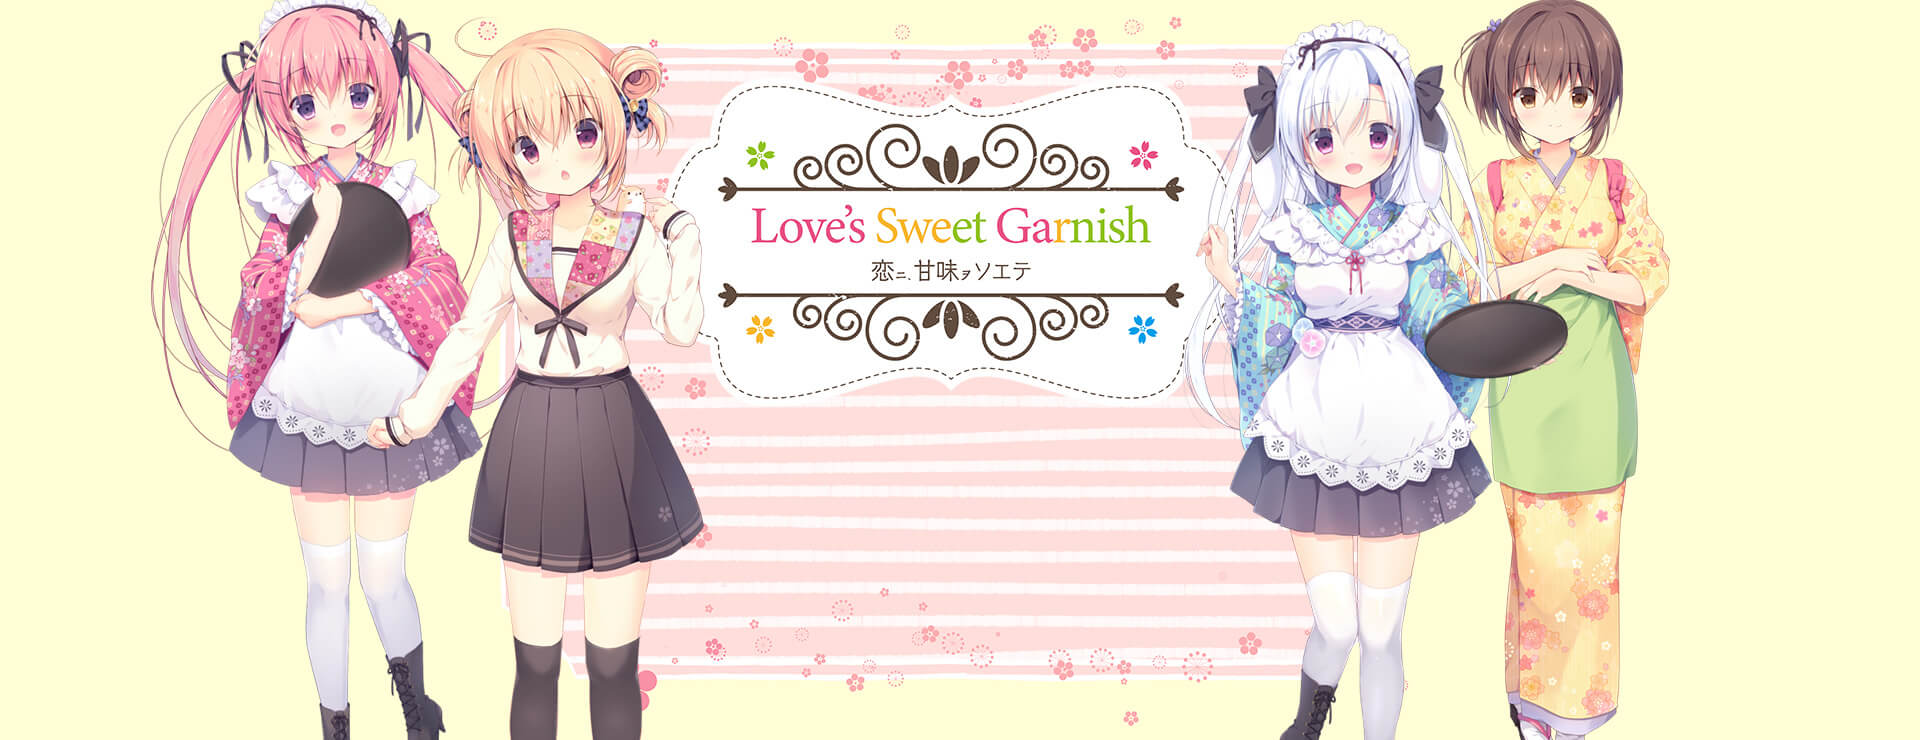 Love's Sweet Garnish - Novela Visual Juego